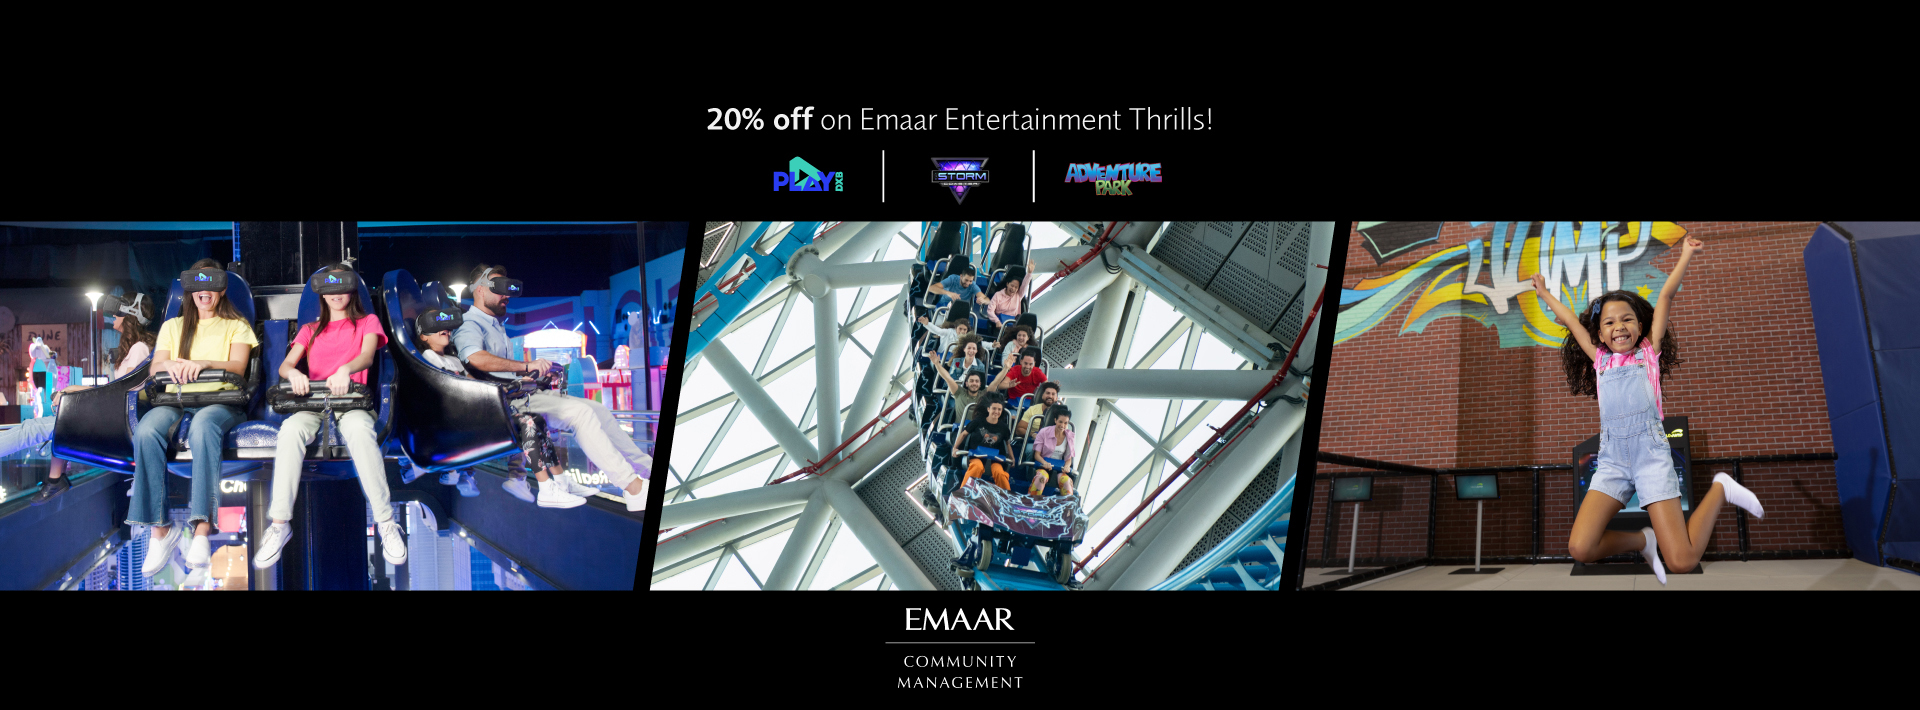 Your exclusive treat is here! 20% Off on Emaar Entertainment Thrills!